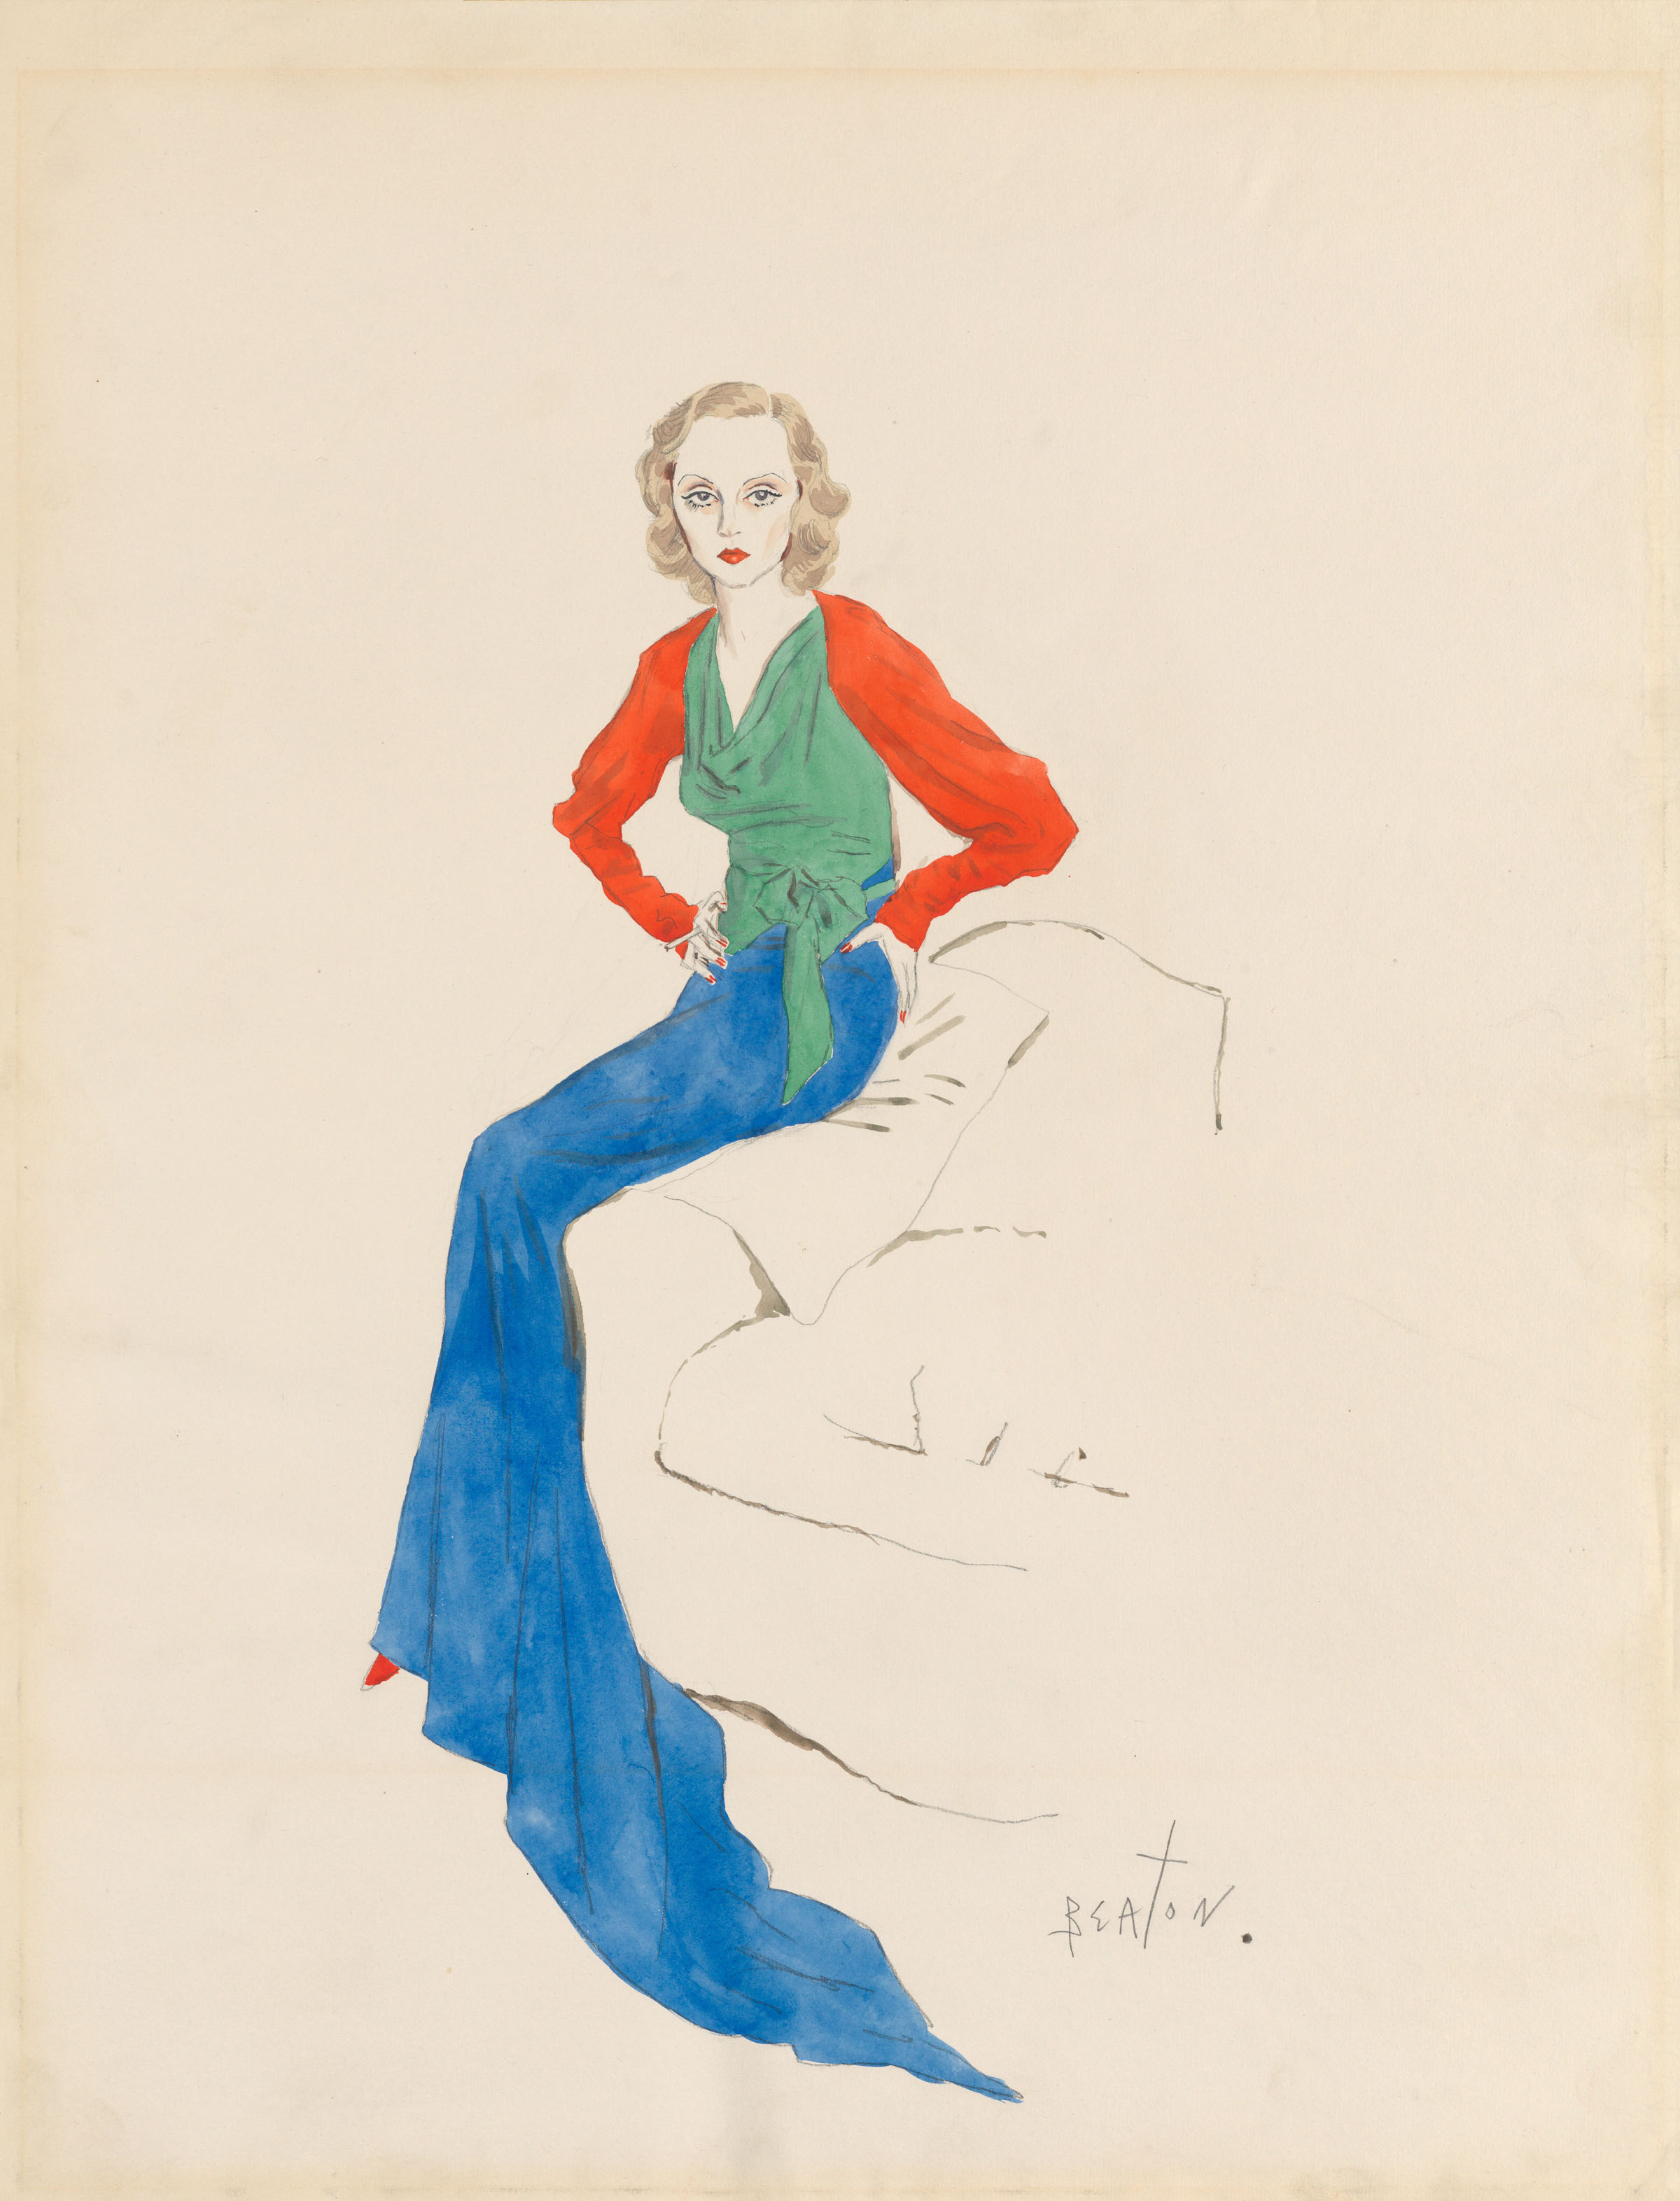 Tallulah Bankhead by Cecil Beaton, 1932